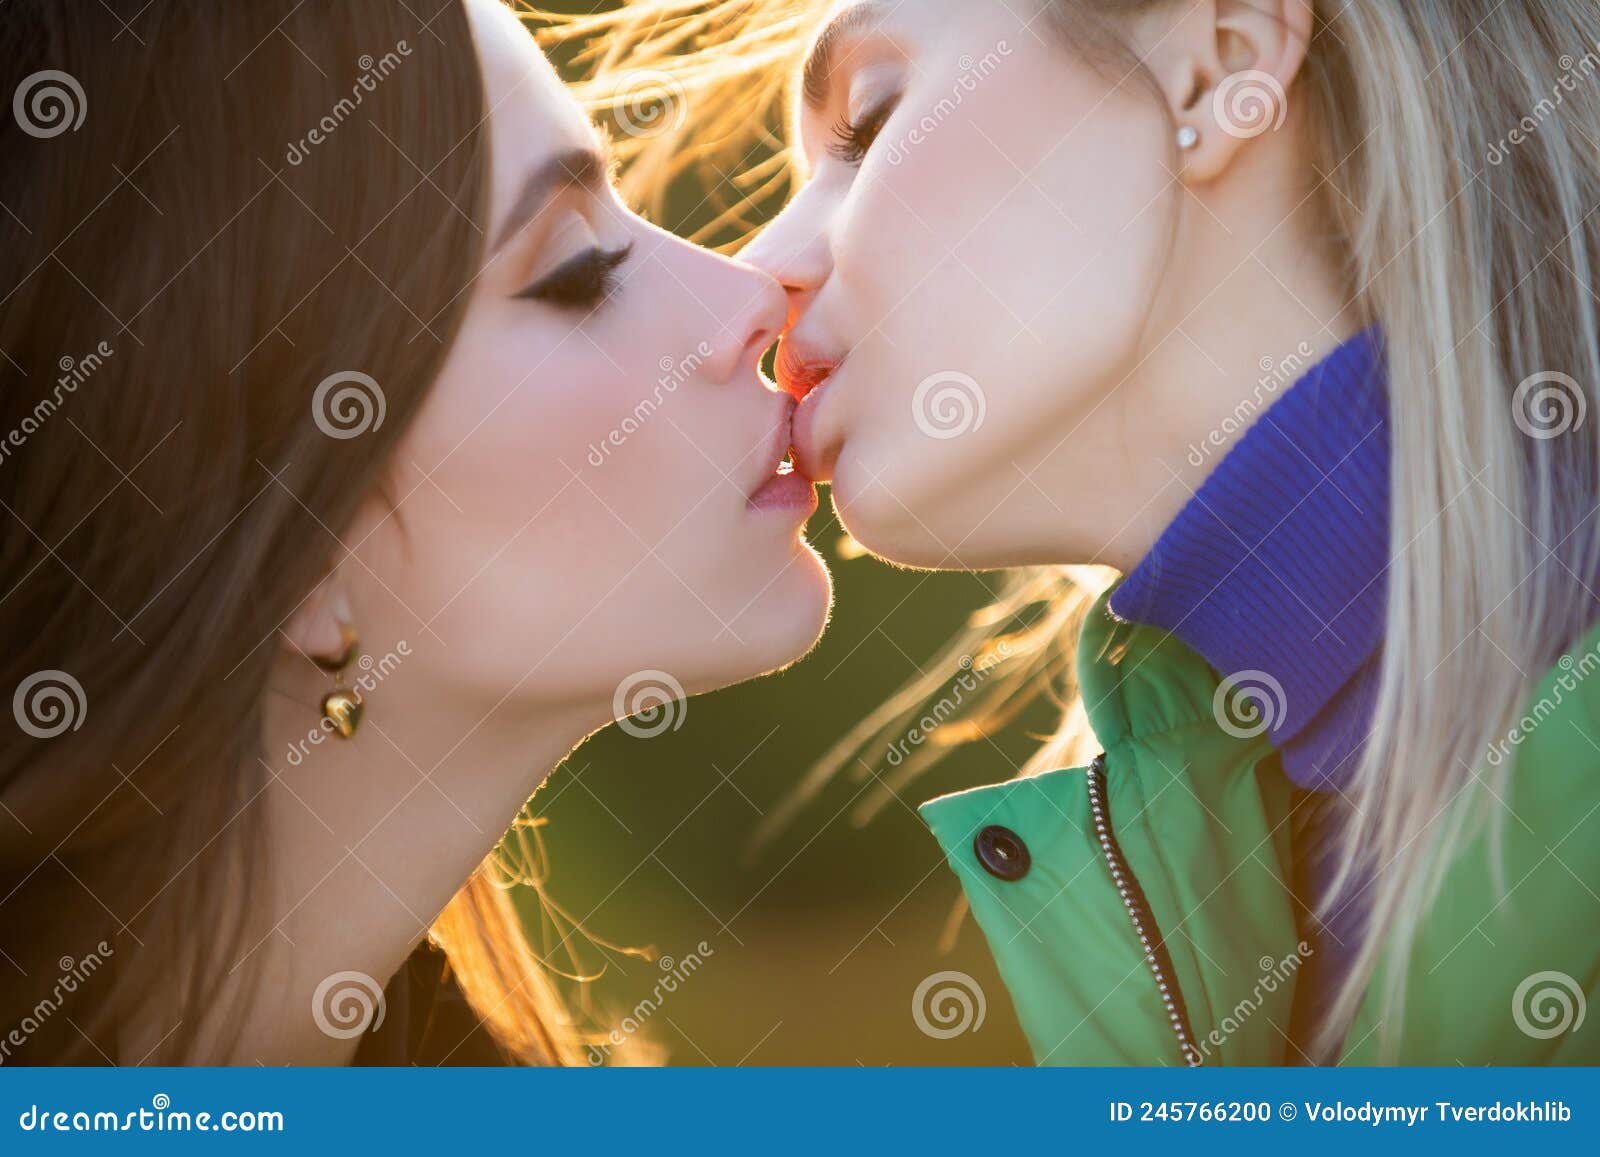 Lesbian secretaries kissing